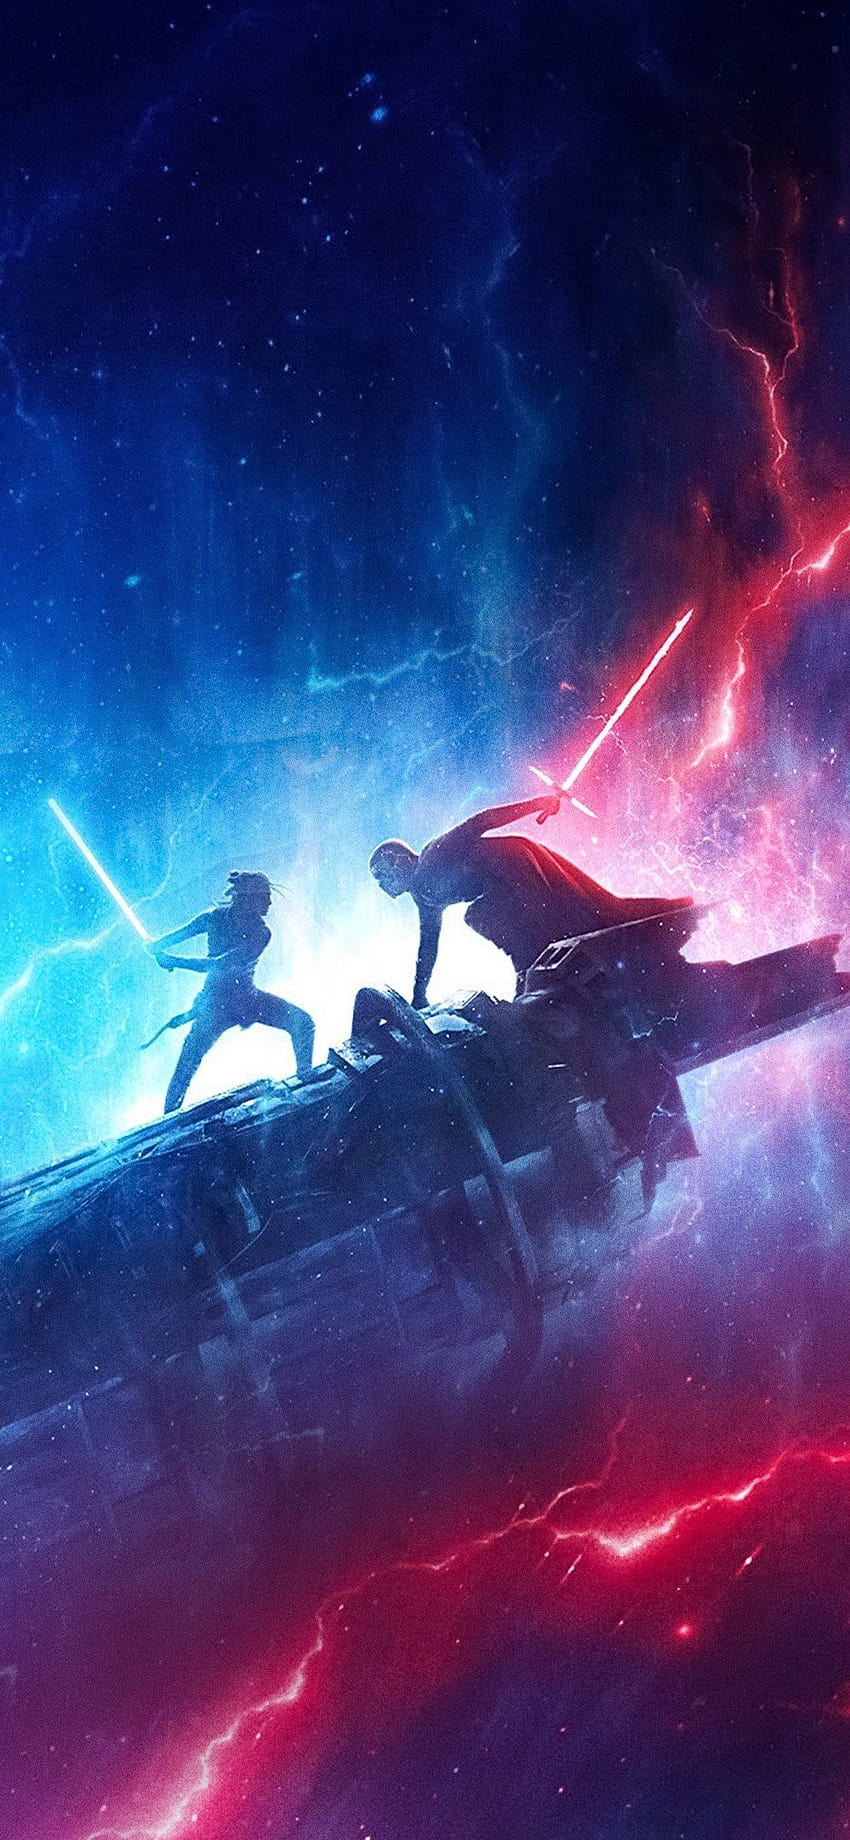 Star Wars The Rise of Skywalker 2019 4k iPhone wallpaper - Star Wars